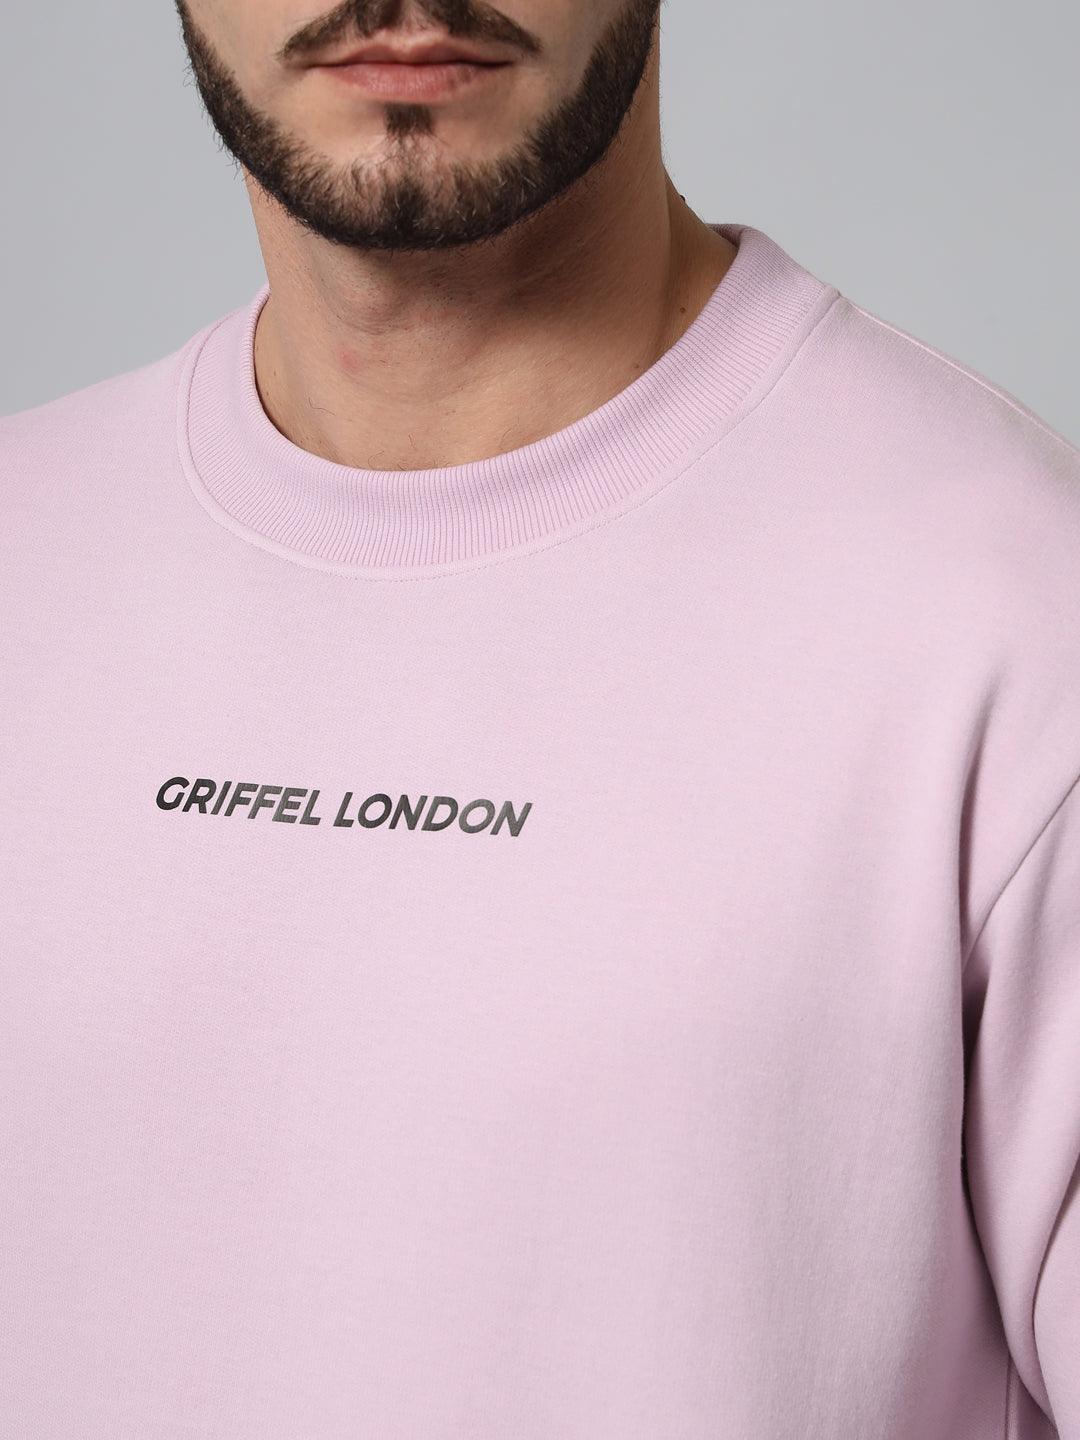 Griffel Men's Cotton Fleece Round Neck Light Purple Sweatshirt with Full Sleeve and Front Logo Print - griffel